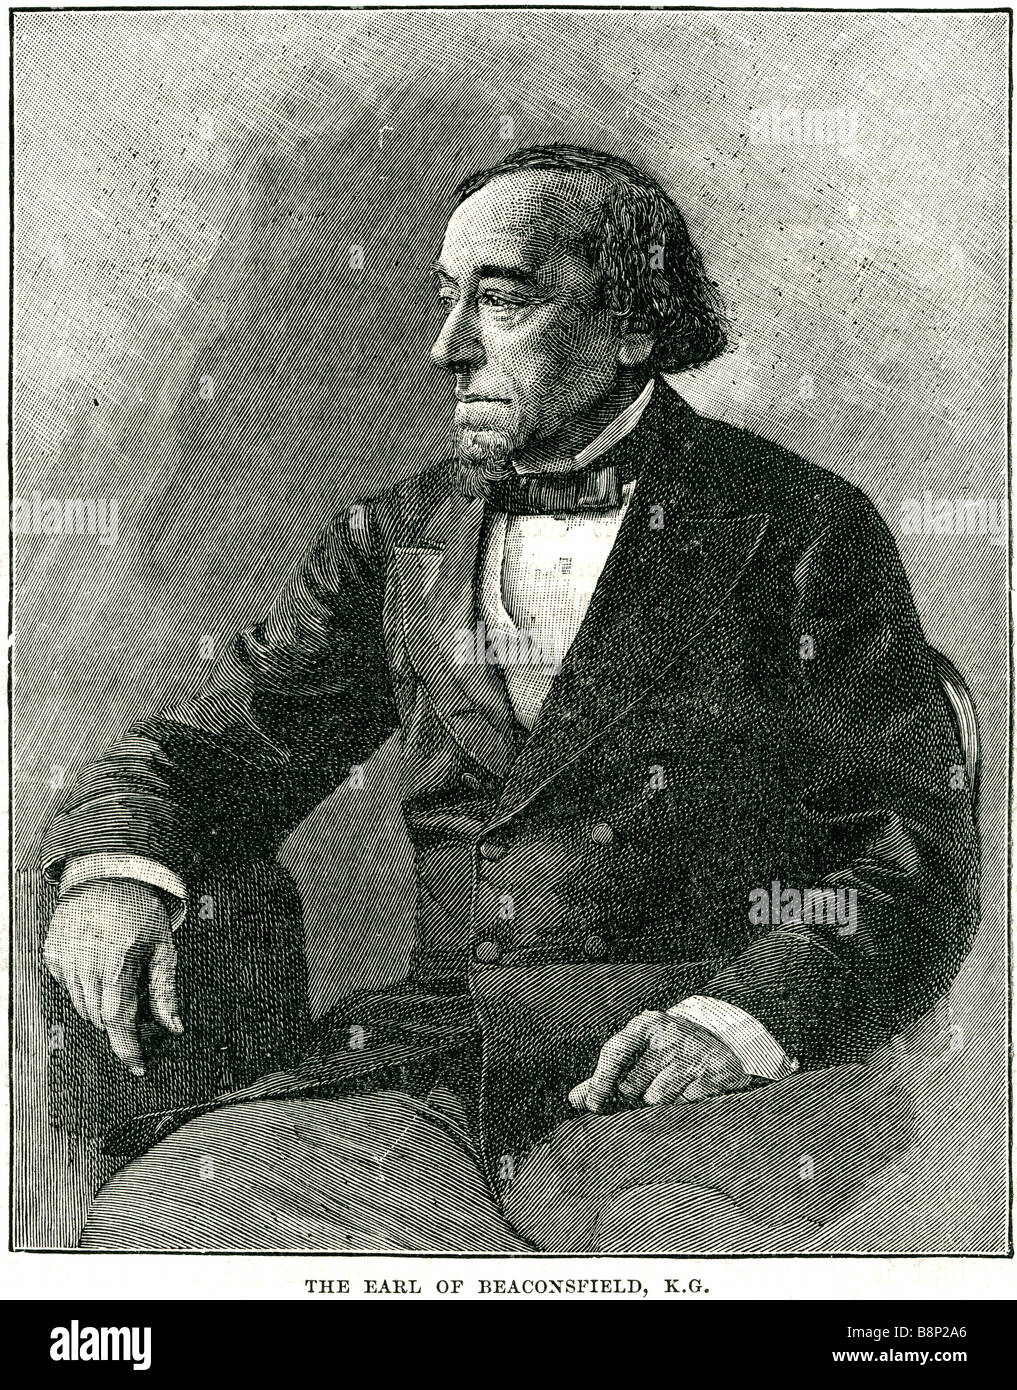 Earl of Beaconsfield Benjamin Disraeli 1804 1881 British Conservative statesman Prime Minister literary figure Stock Photo